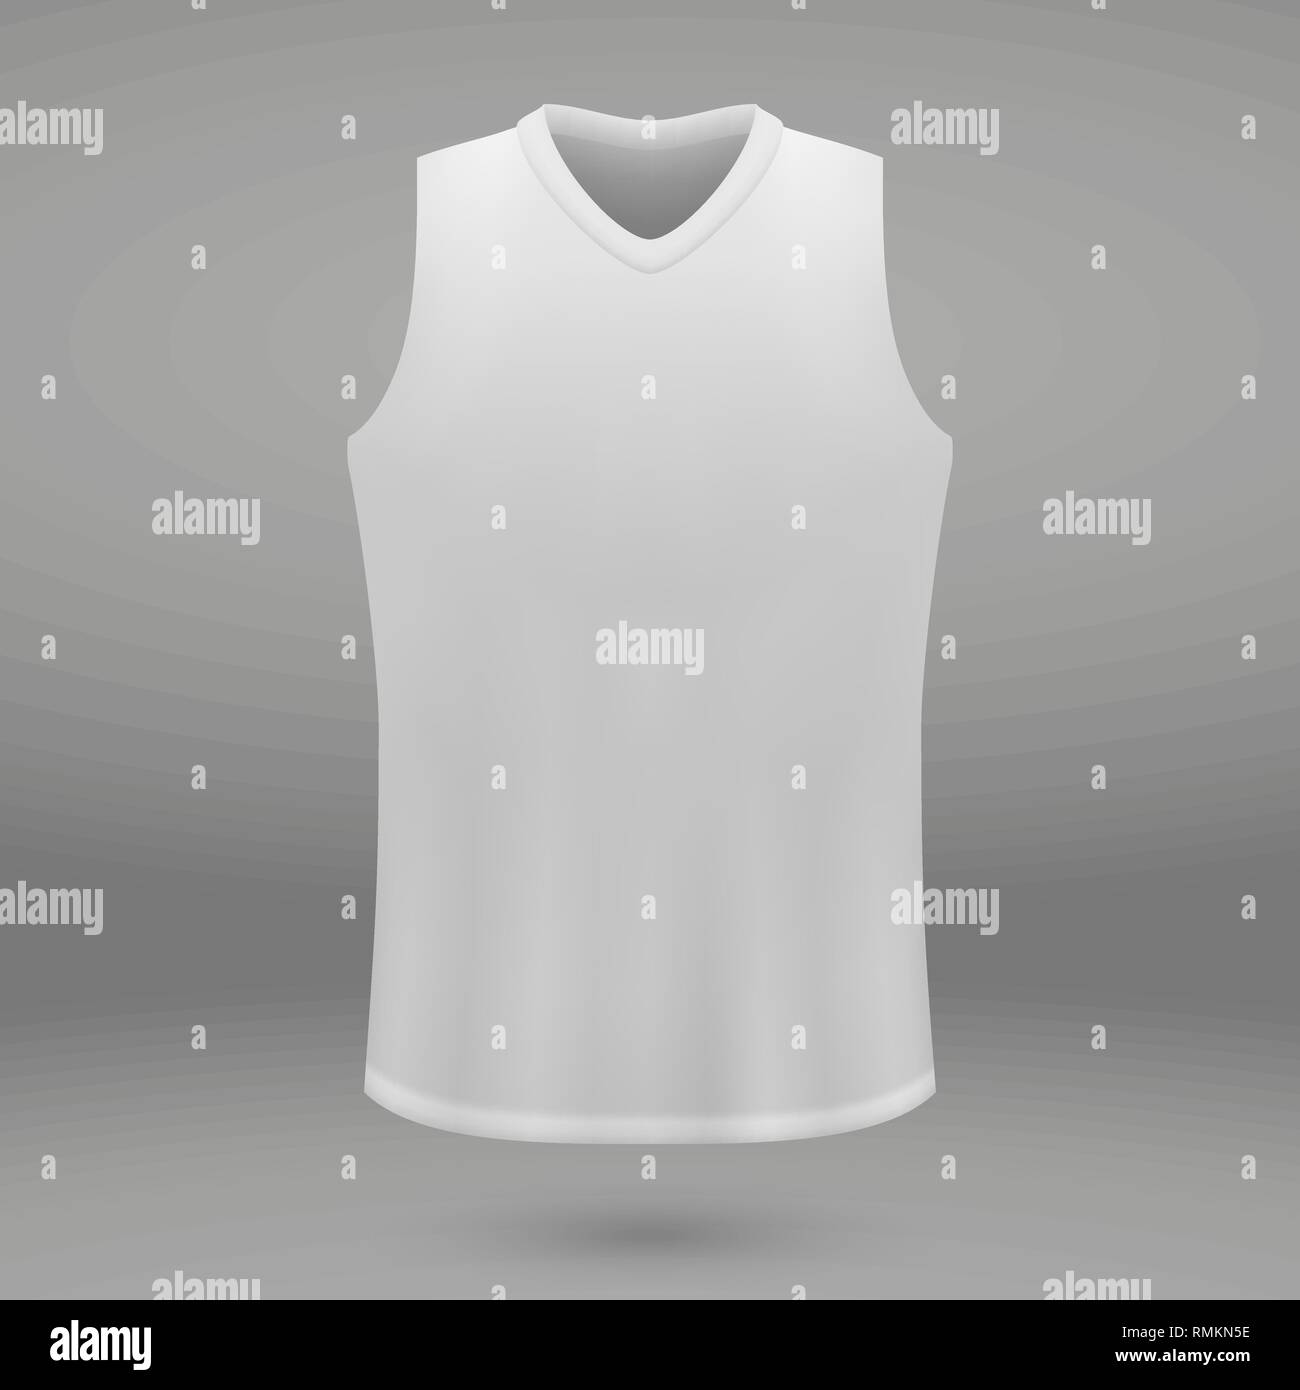 shirt template for basketball jersey. Vector illustration Stock Vector  Image & Art - Alamy